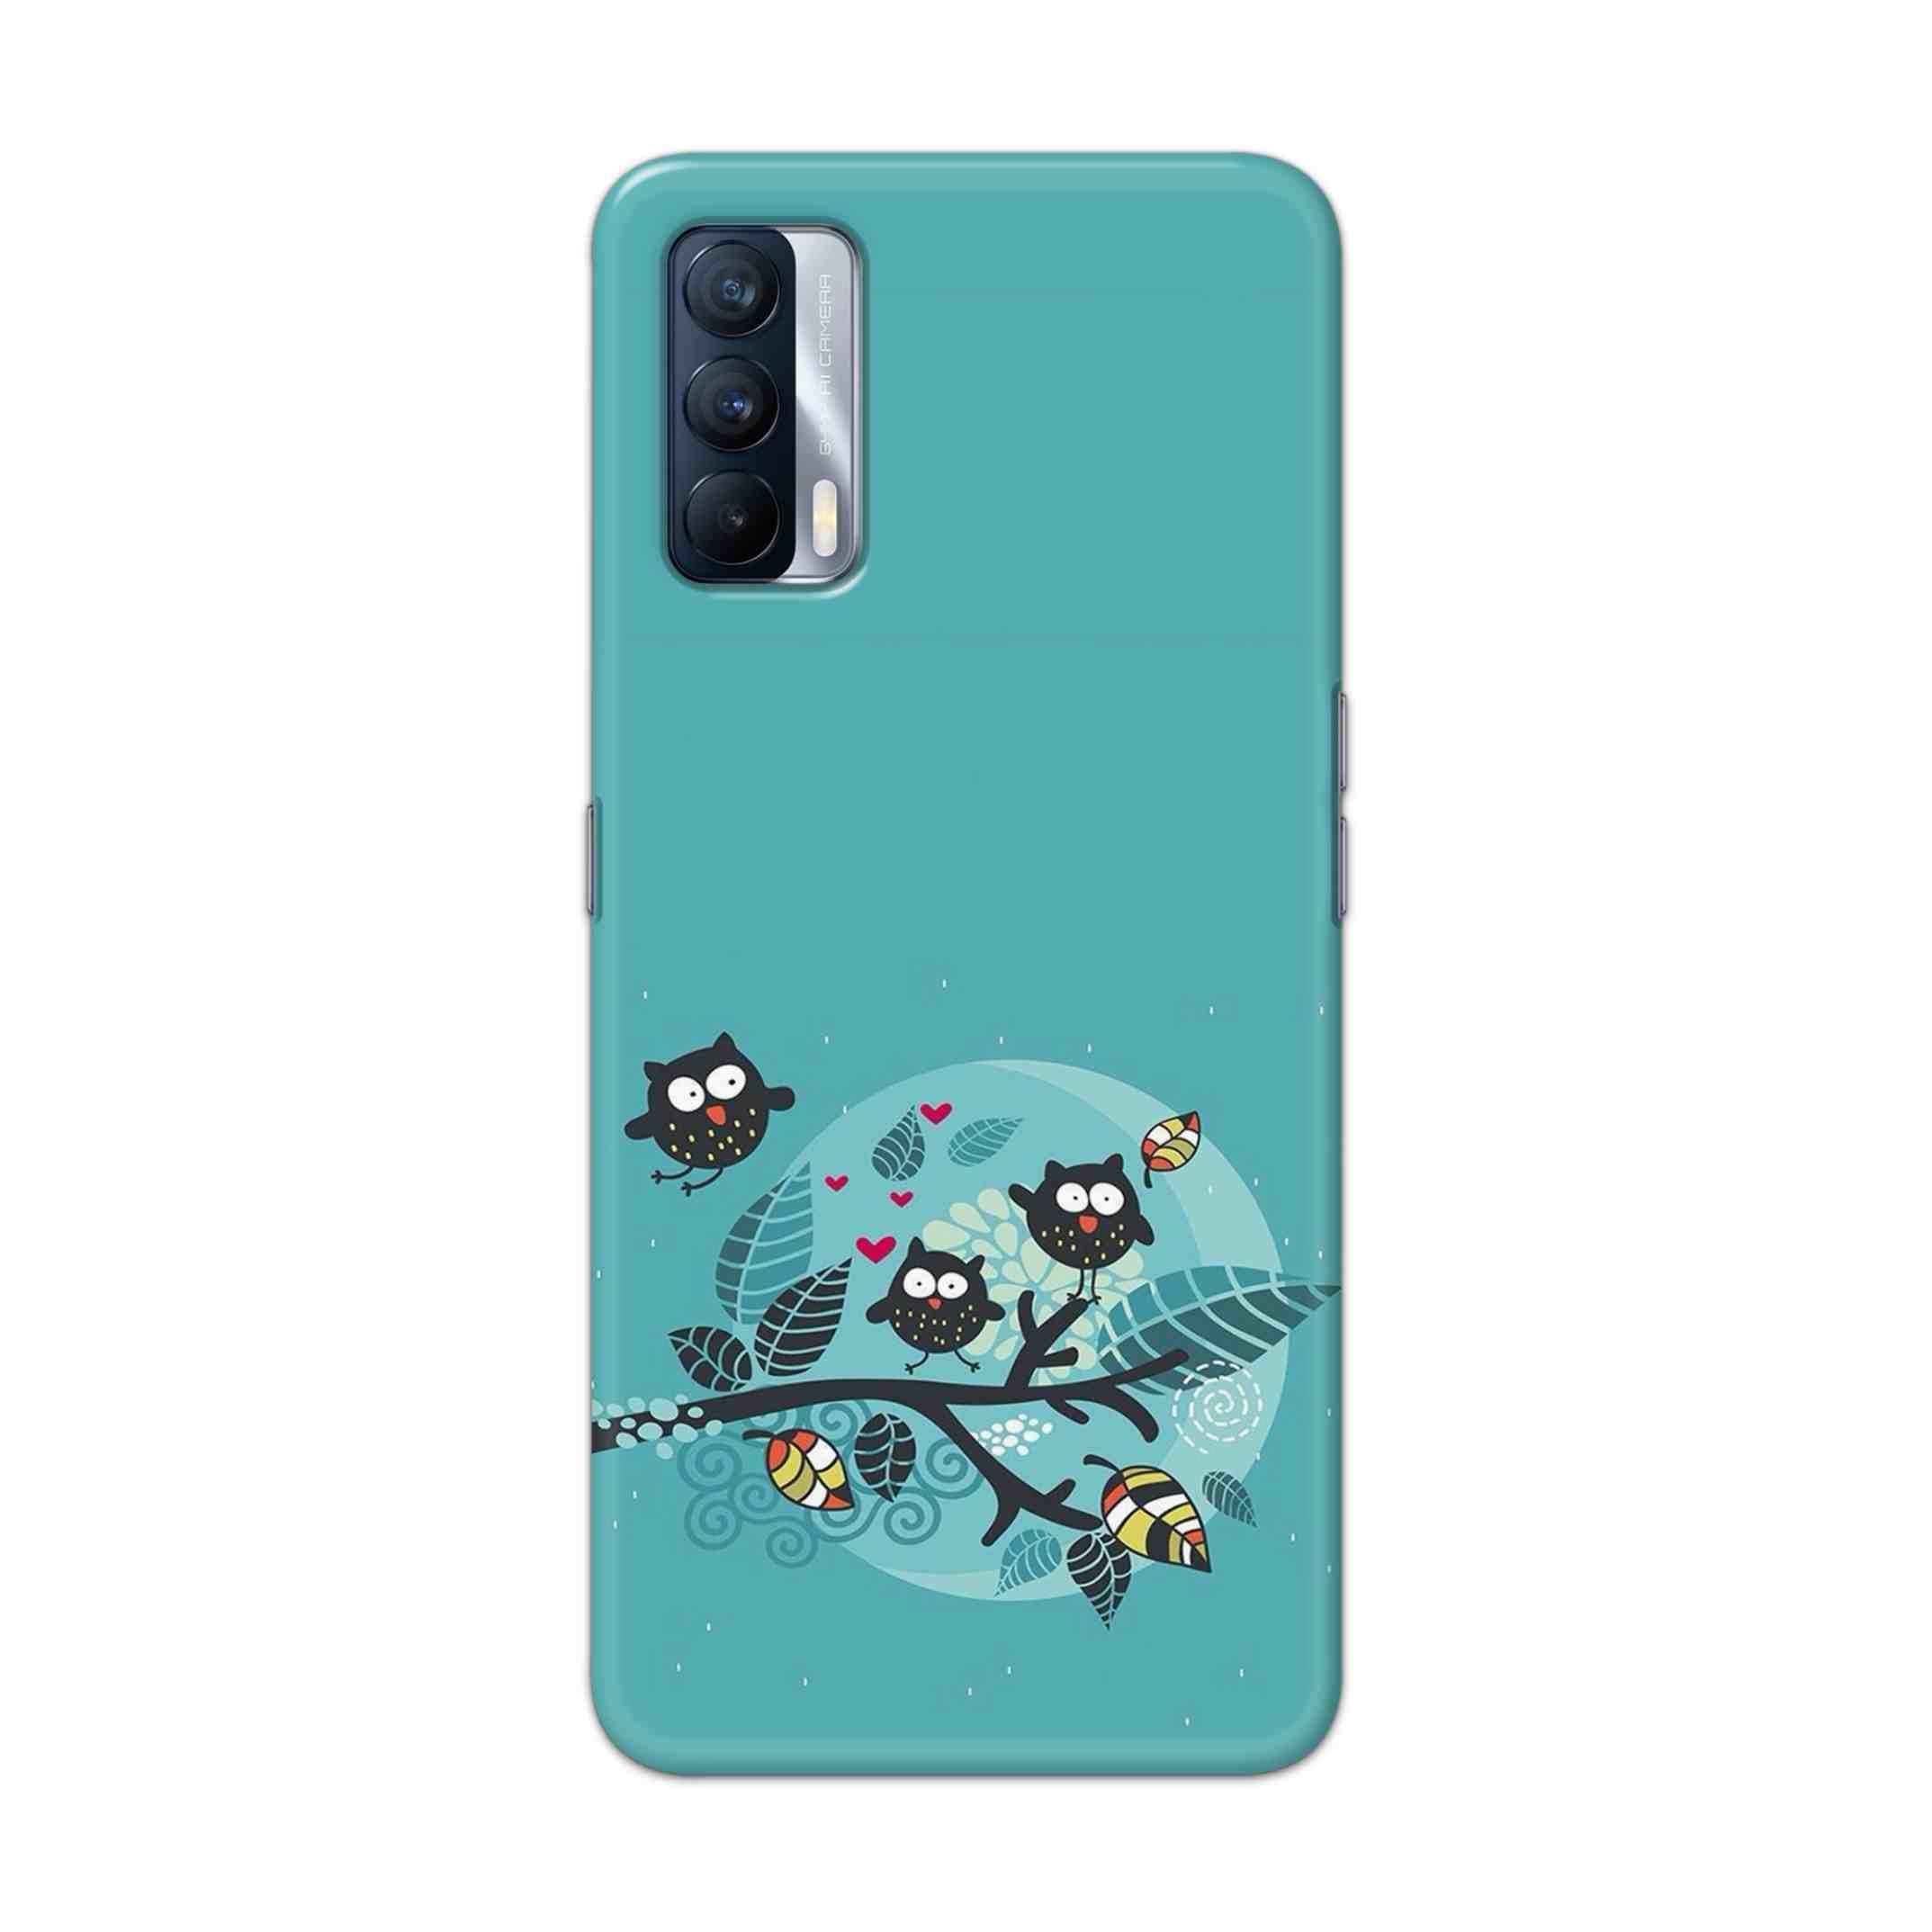 Buy Owl Hard Back Mobile Phone Case Cover For Realme X7 Online